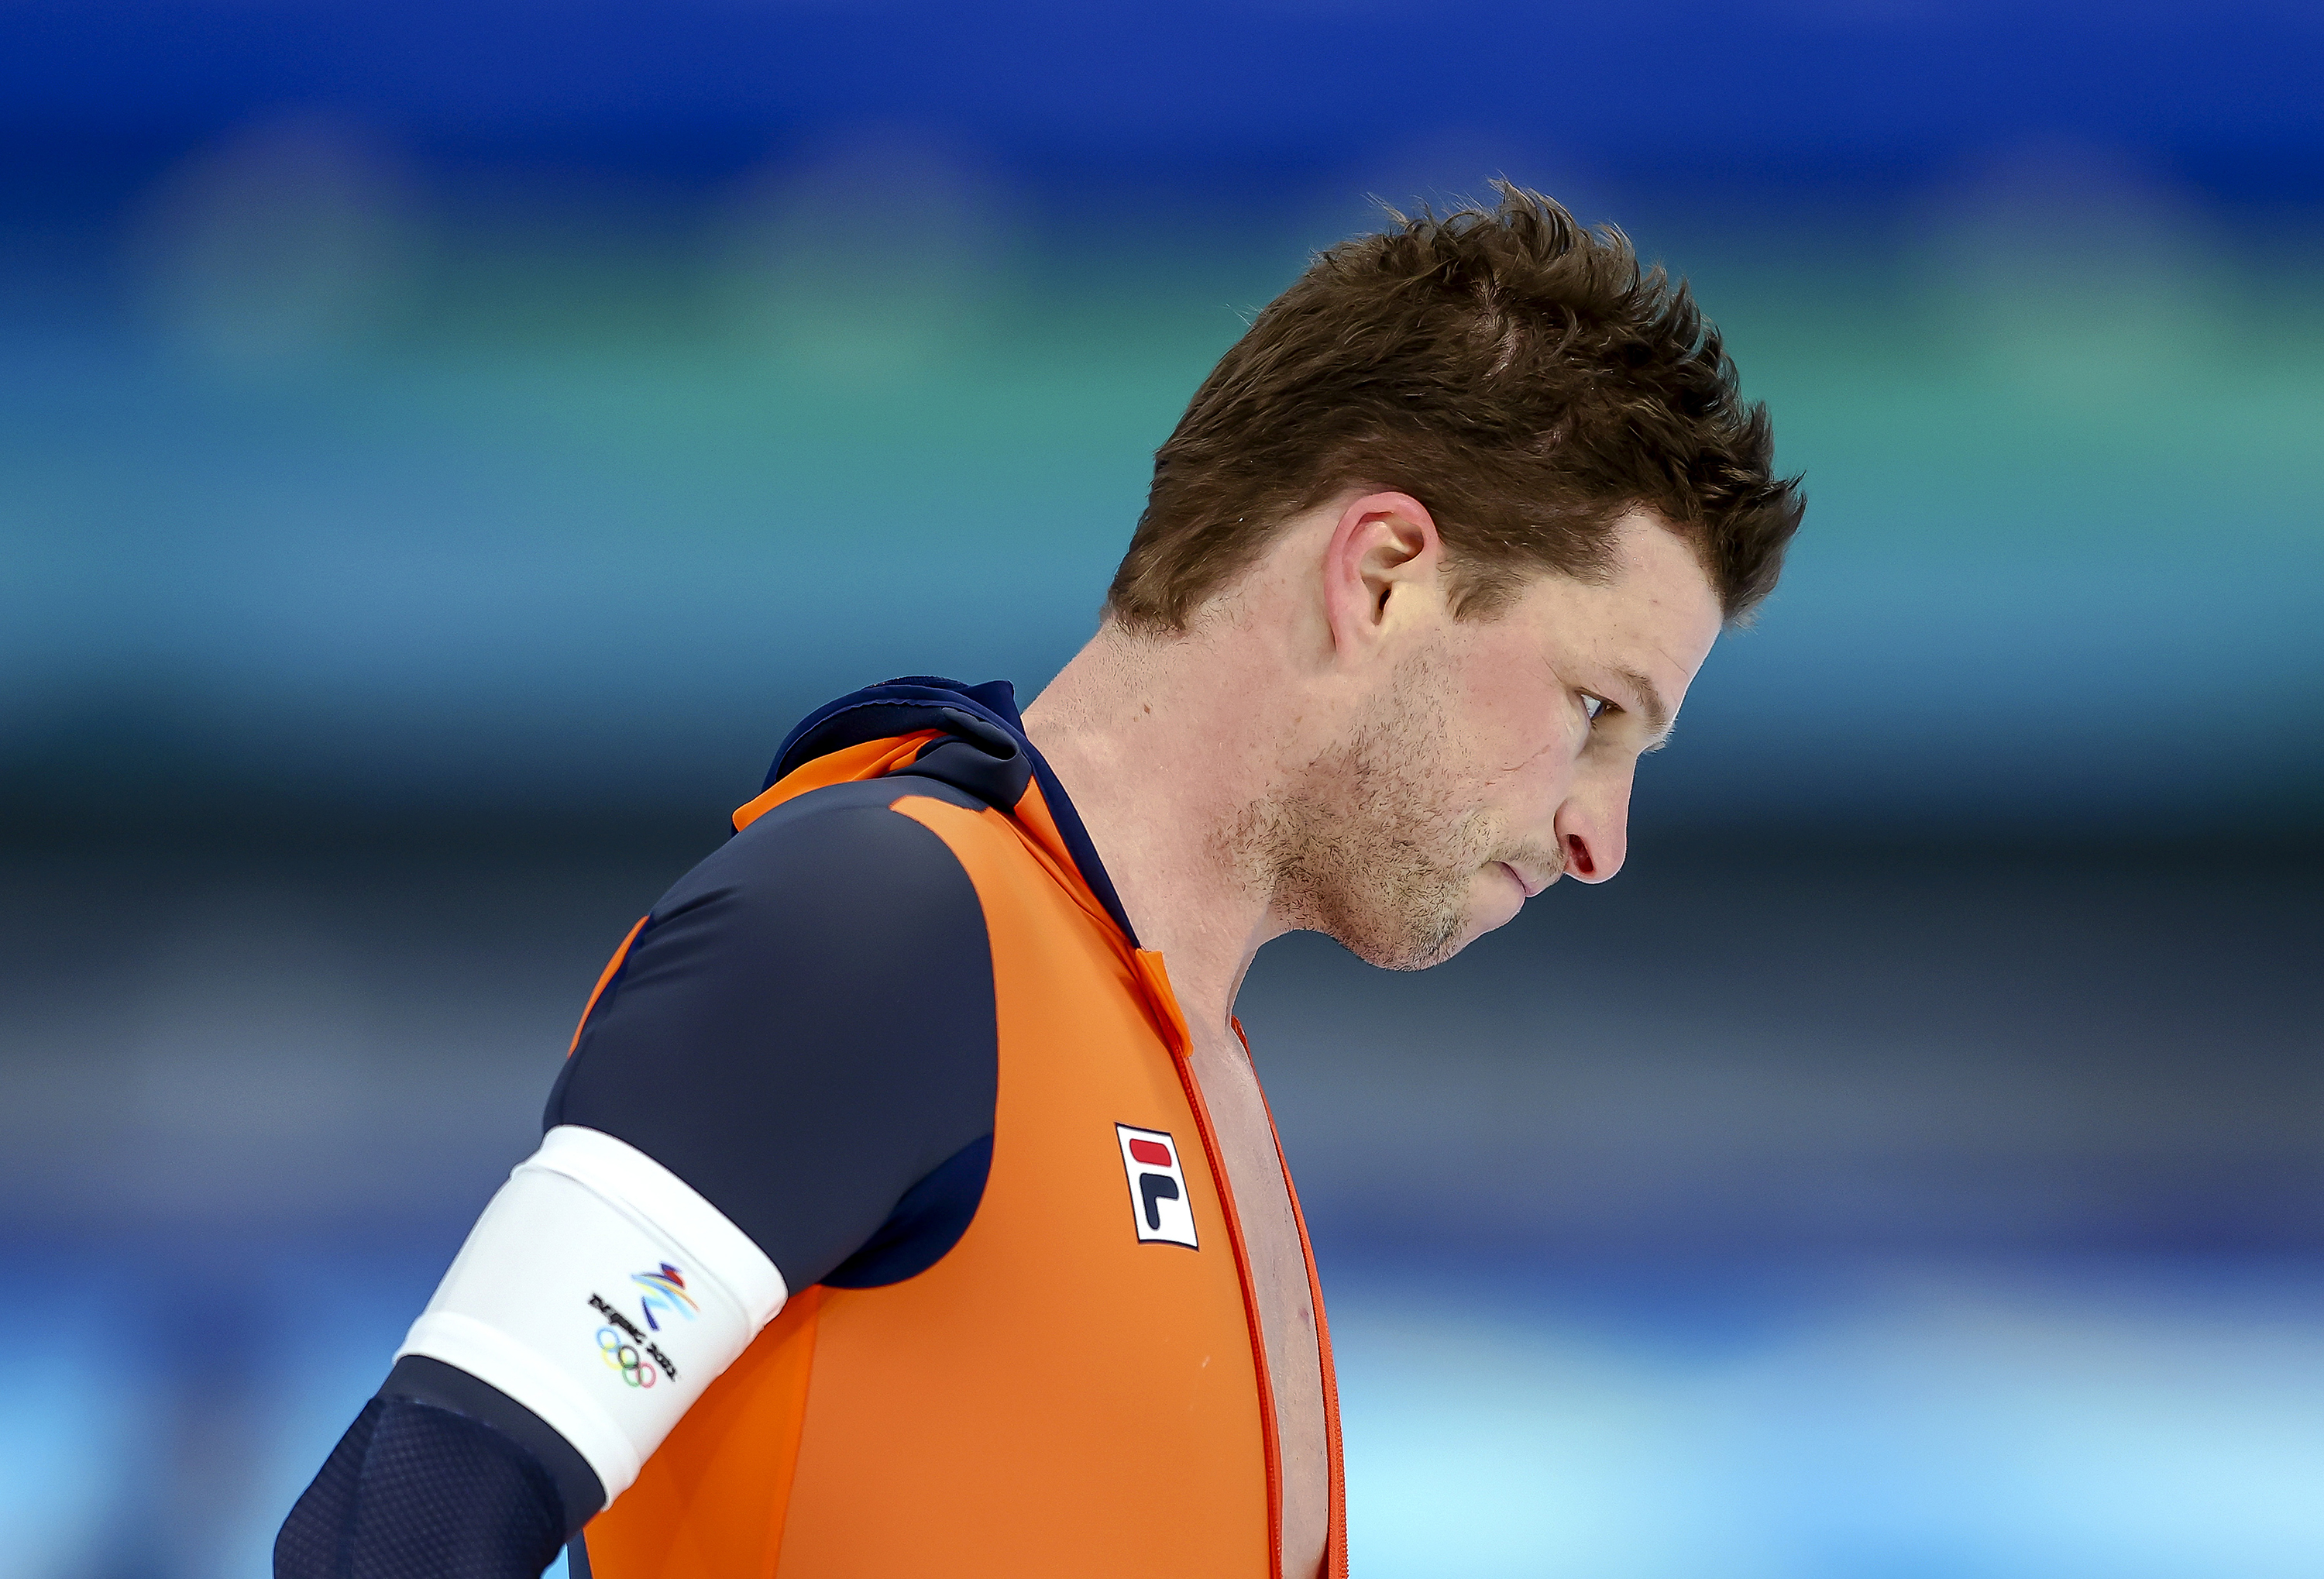 Netherlands' Sven Kramer reacts after finishing men's 5000m speed skating on February 6. 